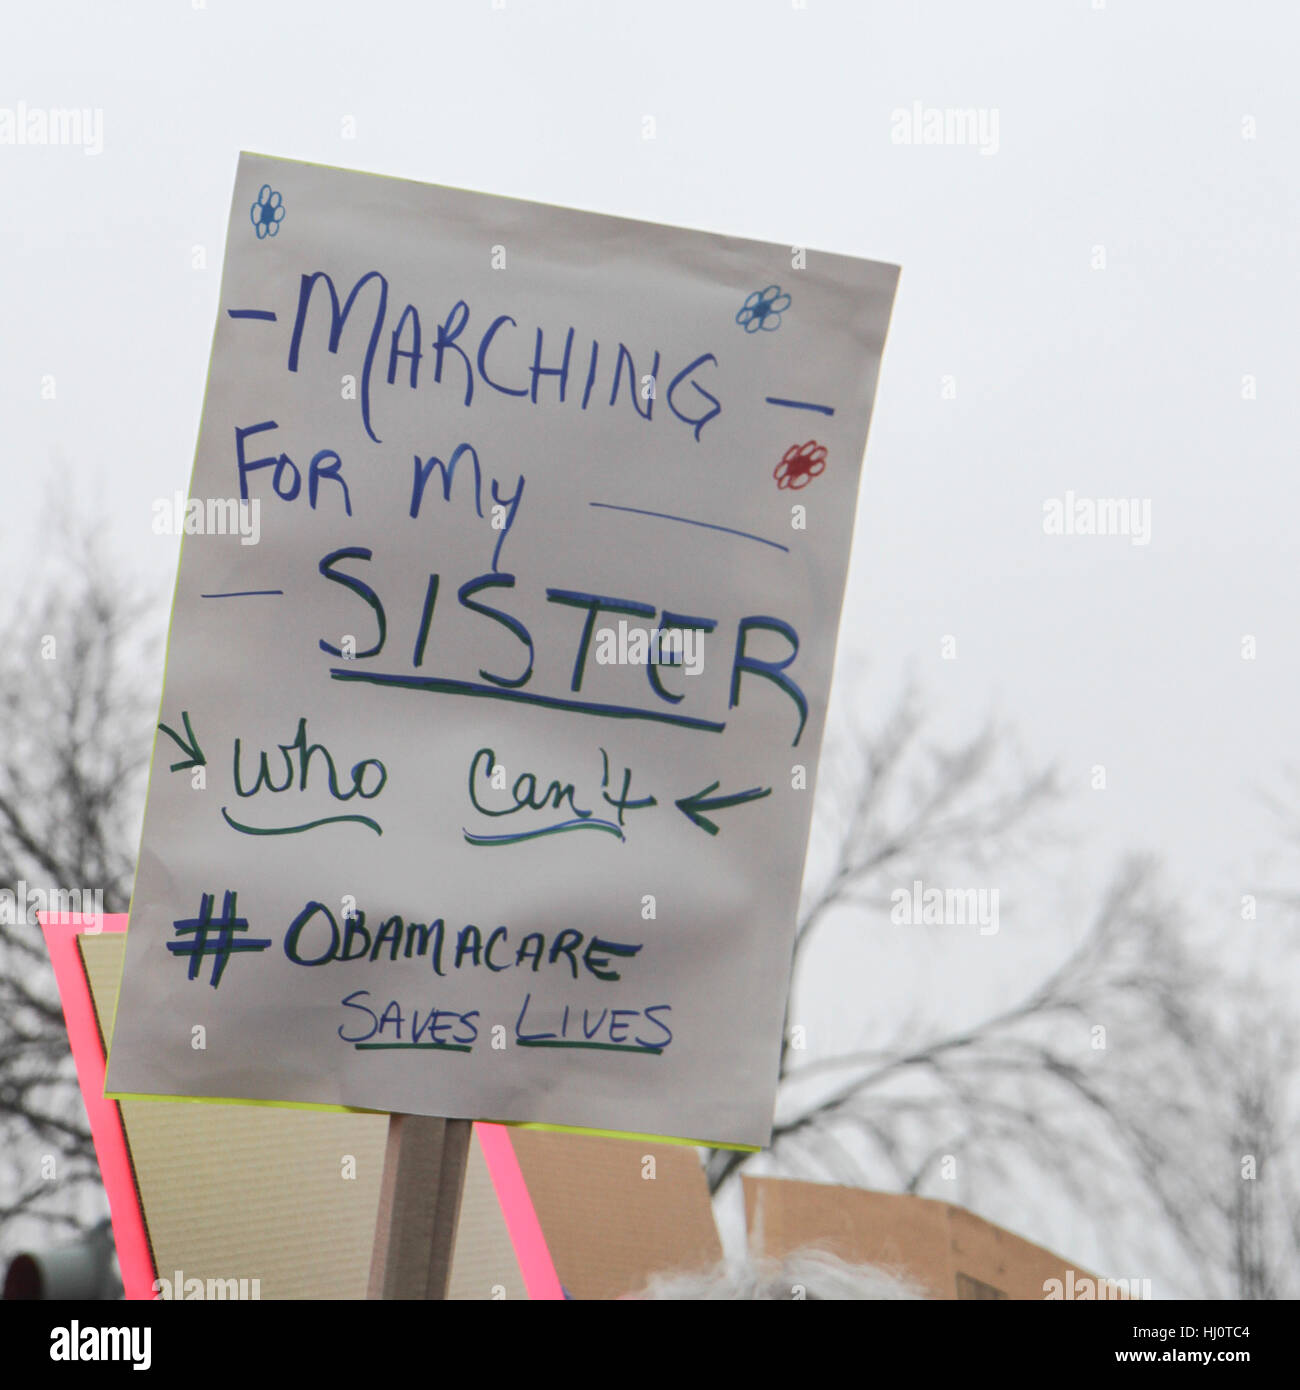 Washington, DC, United States. 21st Jan, 2017. Women's March on Washington. Credit: Susan Pease/Alamy Live News Stock Photo